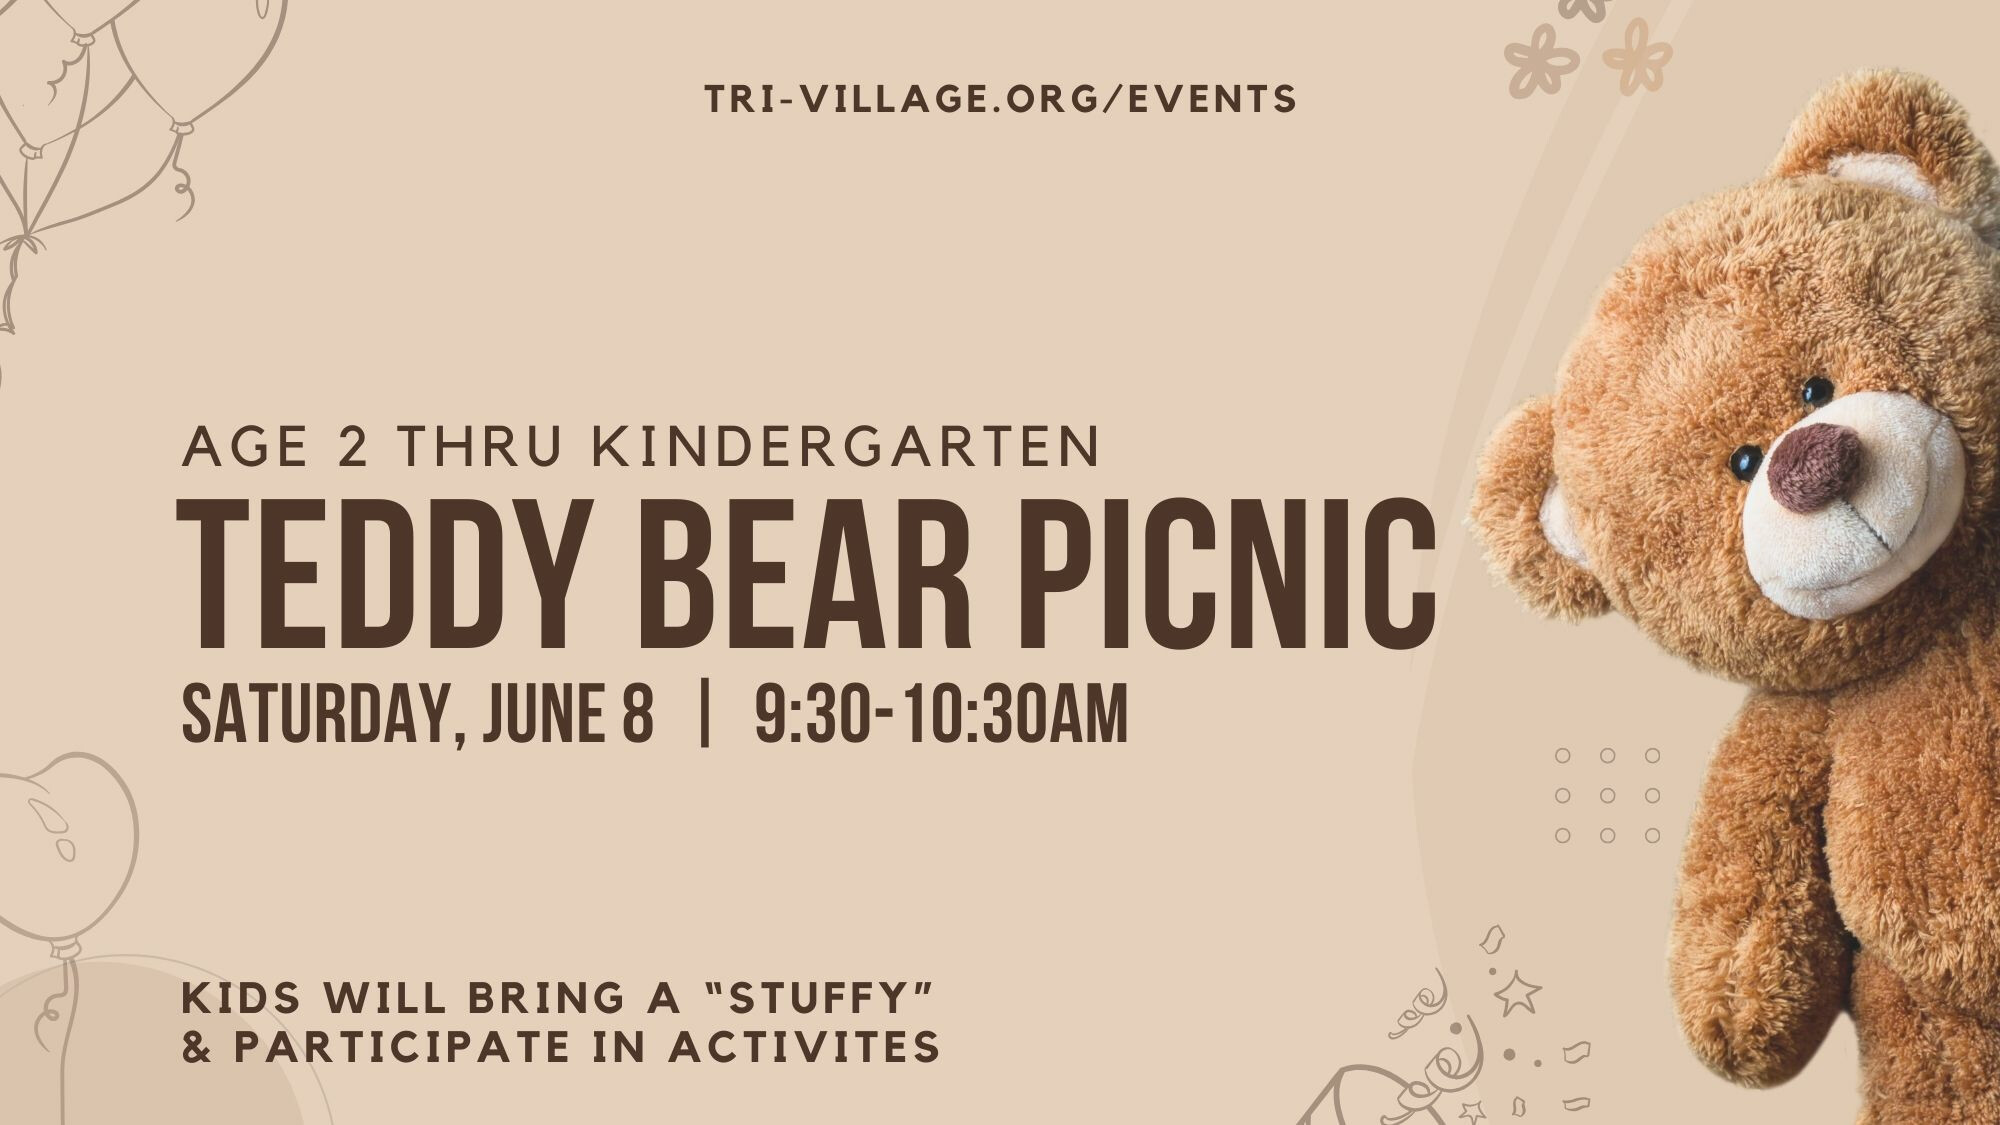 Teddy Bear Picnic (Age 2 thru Kindergarten)